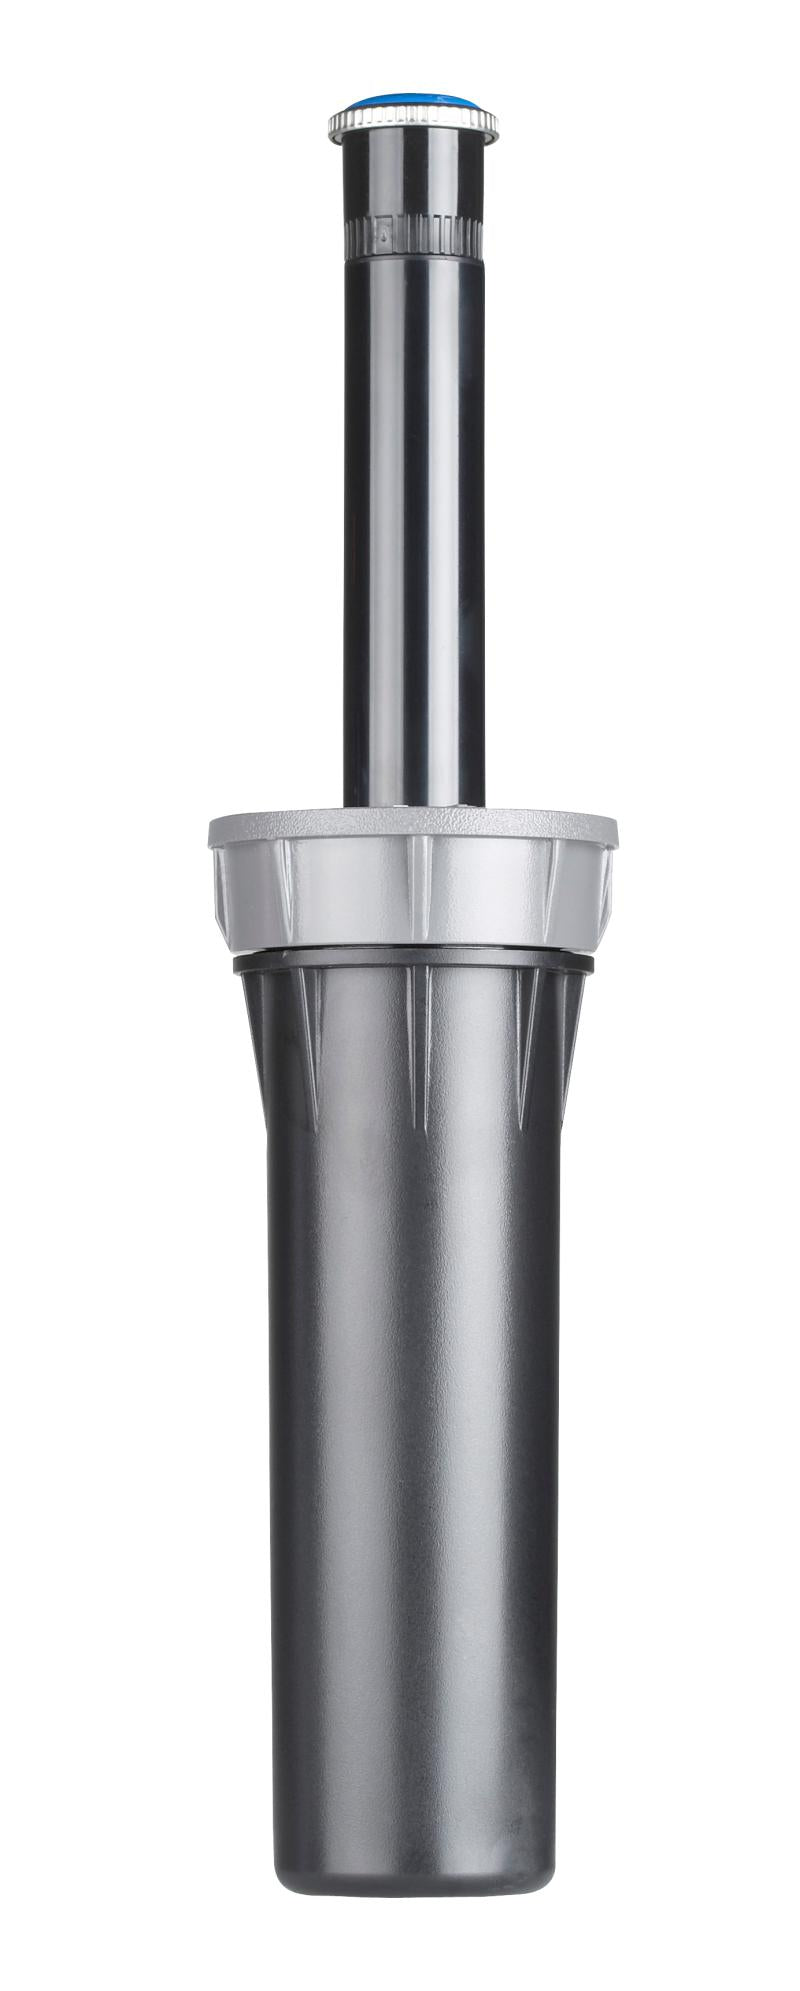 Hunter Industries PROS04PRS40CVF Pro-Spray Sprinkler Body, 10 cm Pop-up with 2.8 Bar Pressure Regulator and Check Valve